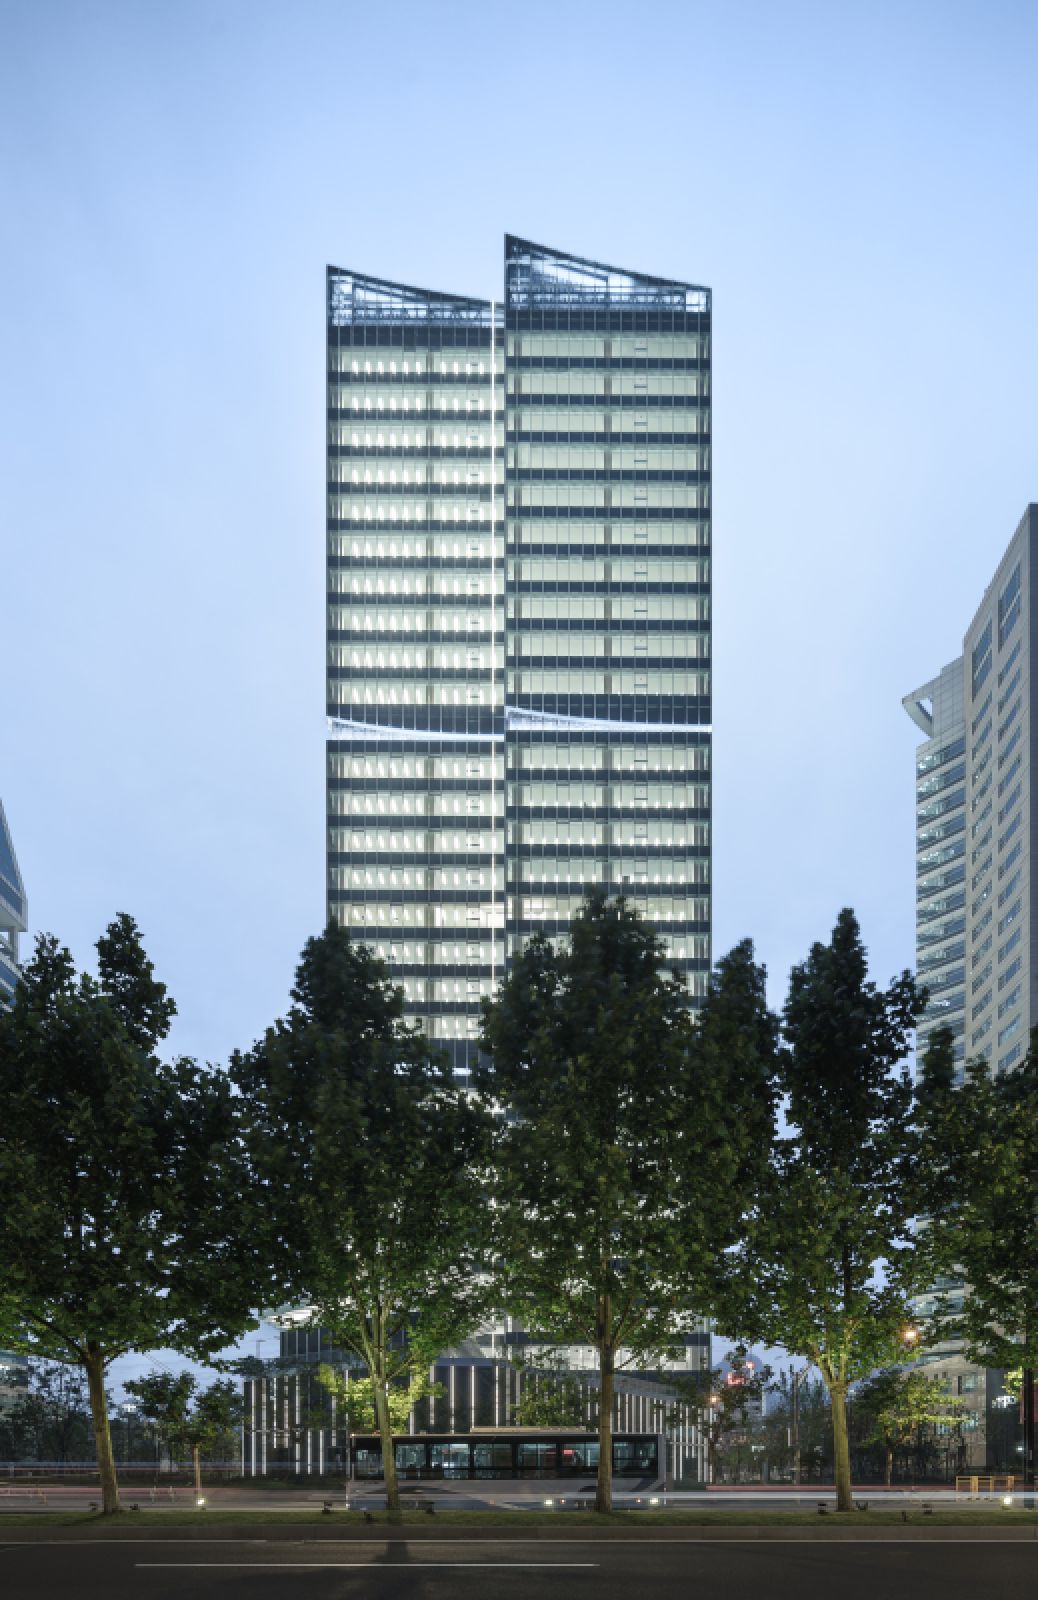 Shanghai International Fortune Center